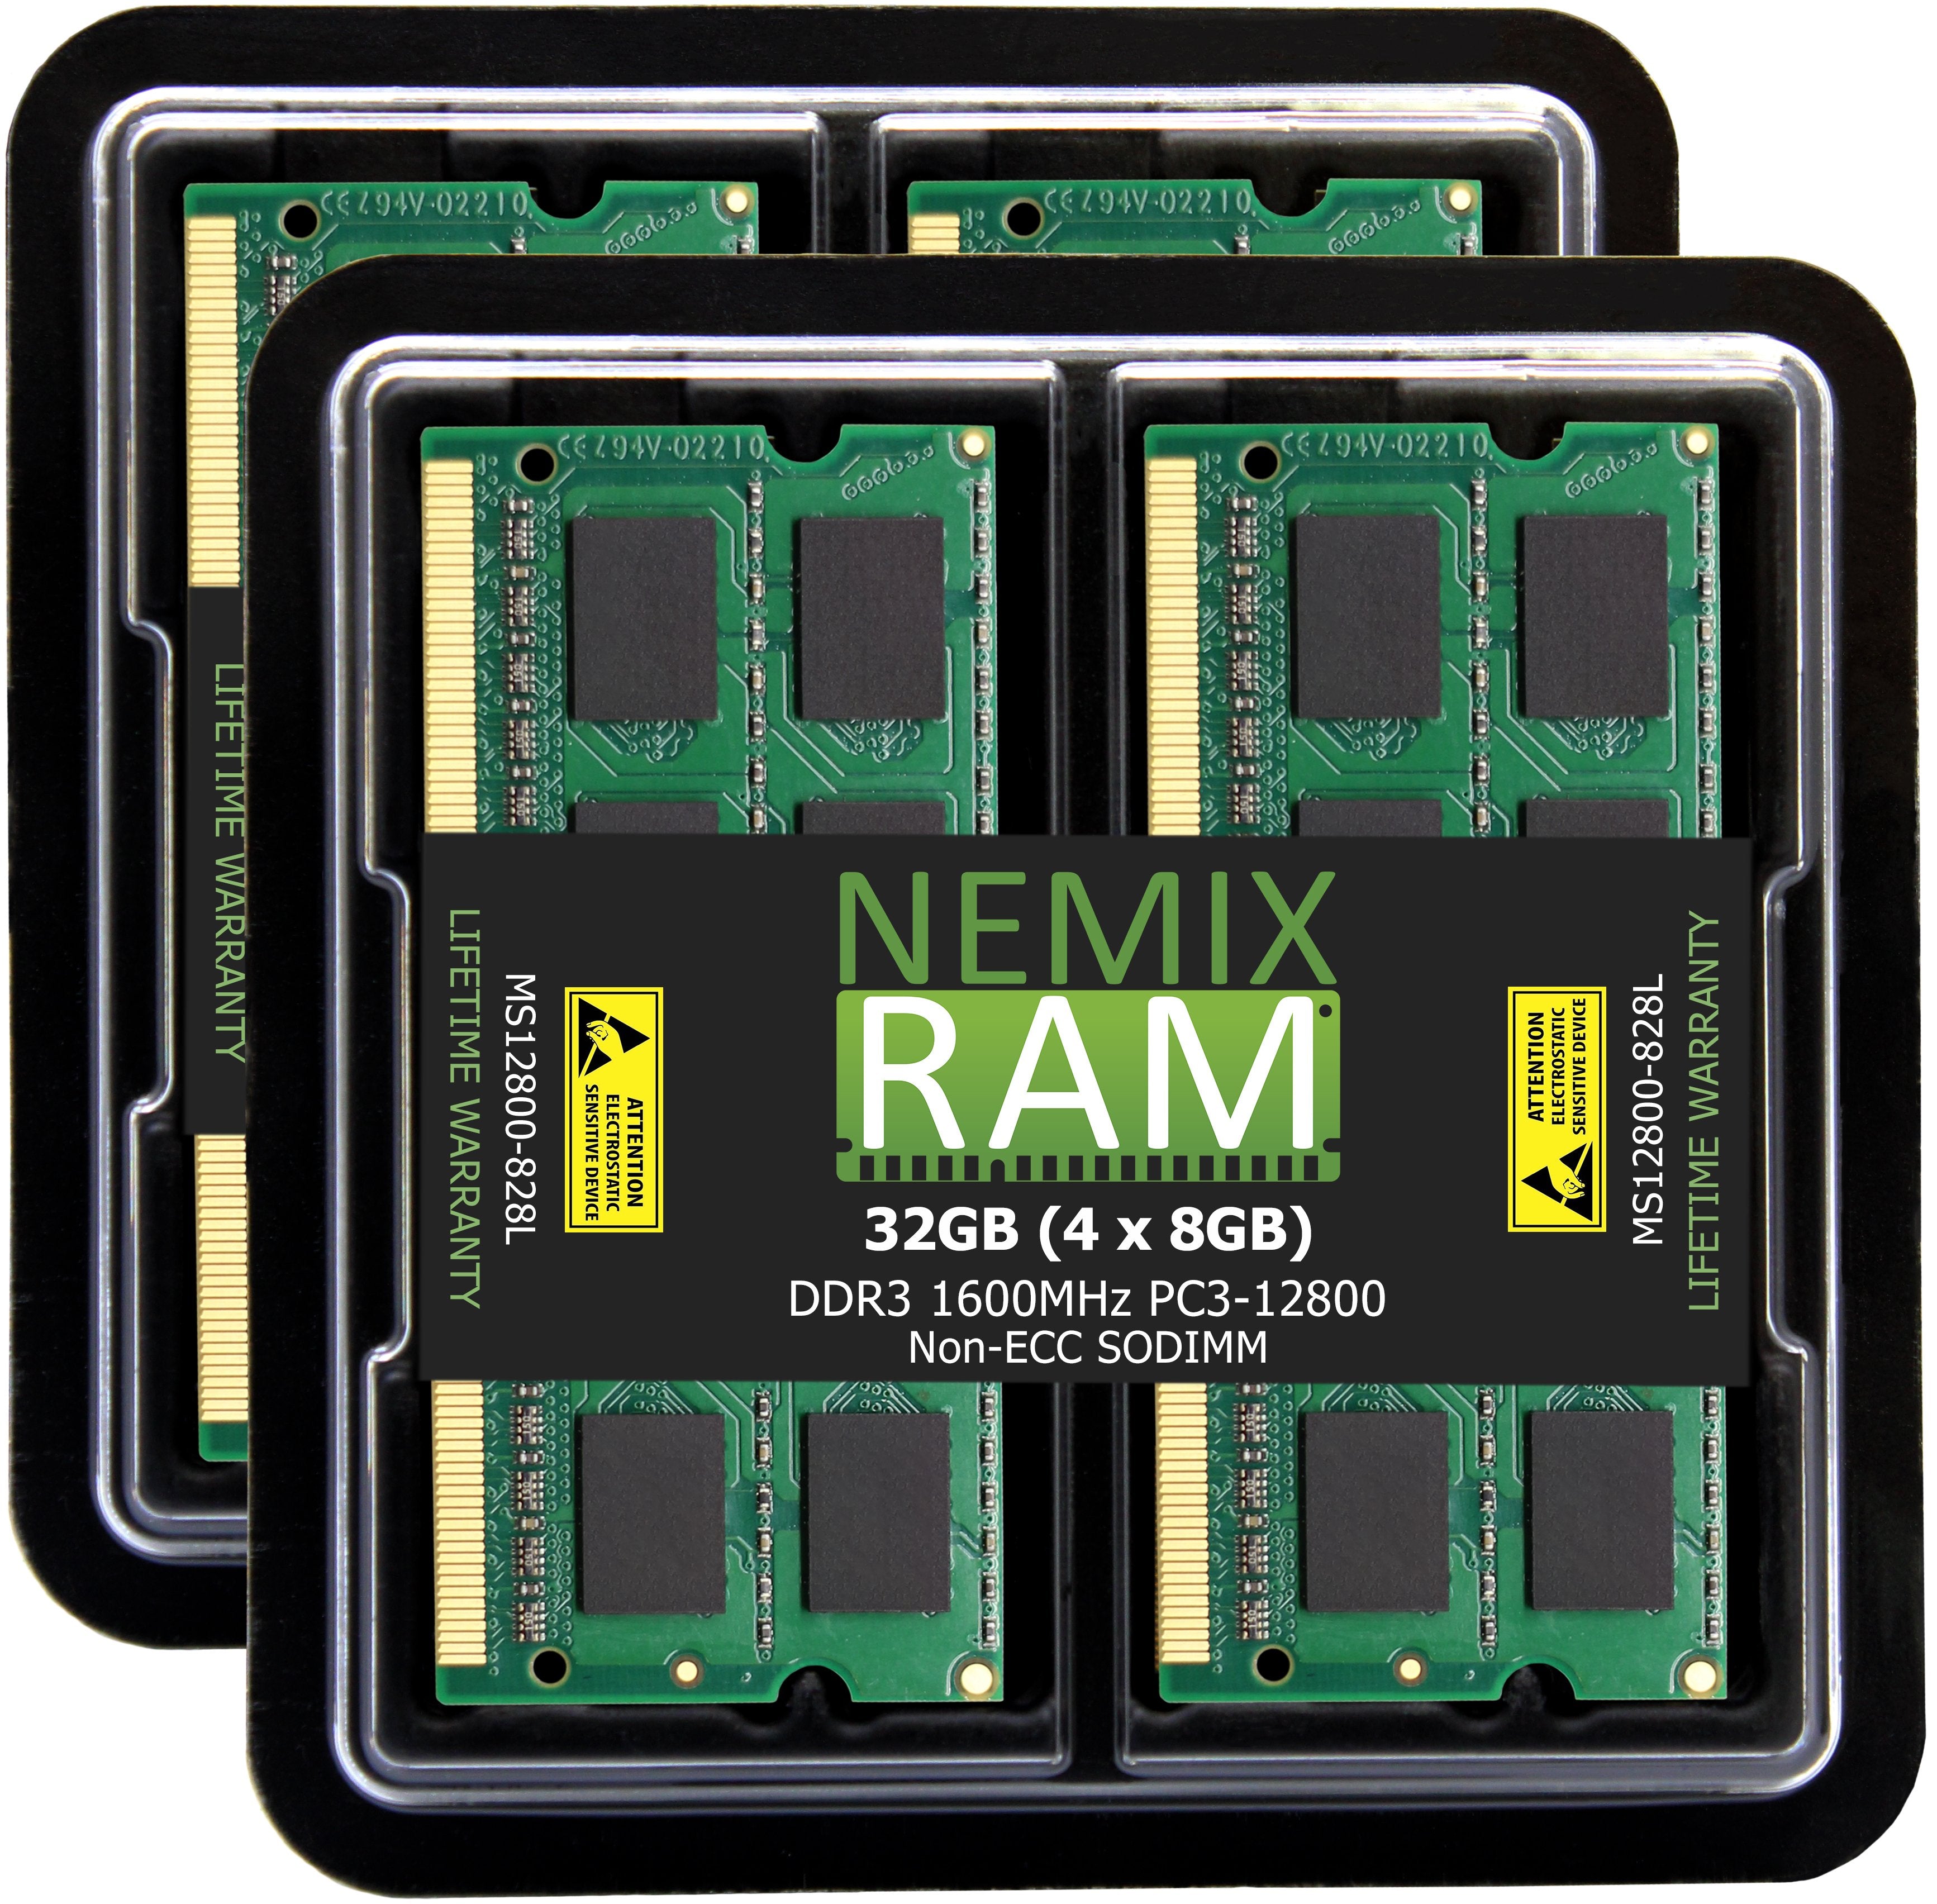 DDR3 1600MHZ PC3-12800 SODIMM for Apple iMac 2012 - 2013 (13,2 14,2)